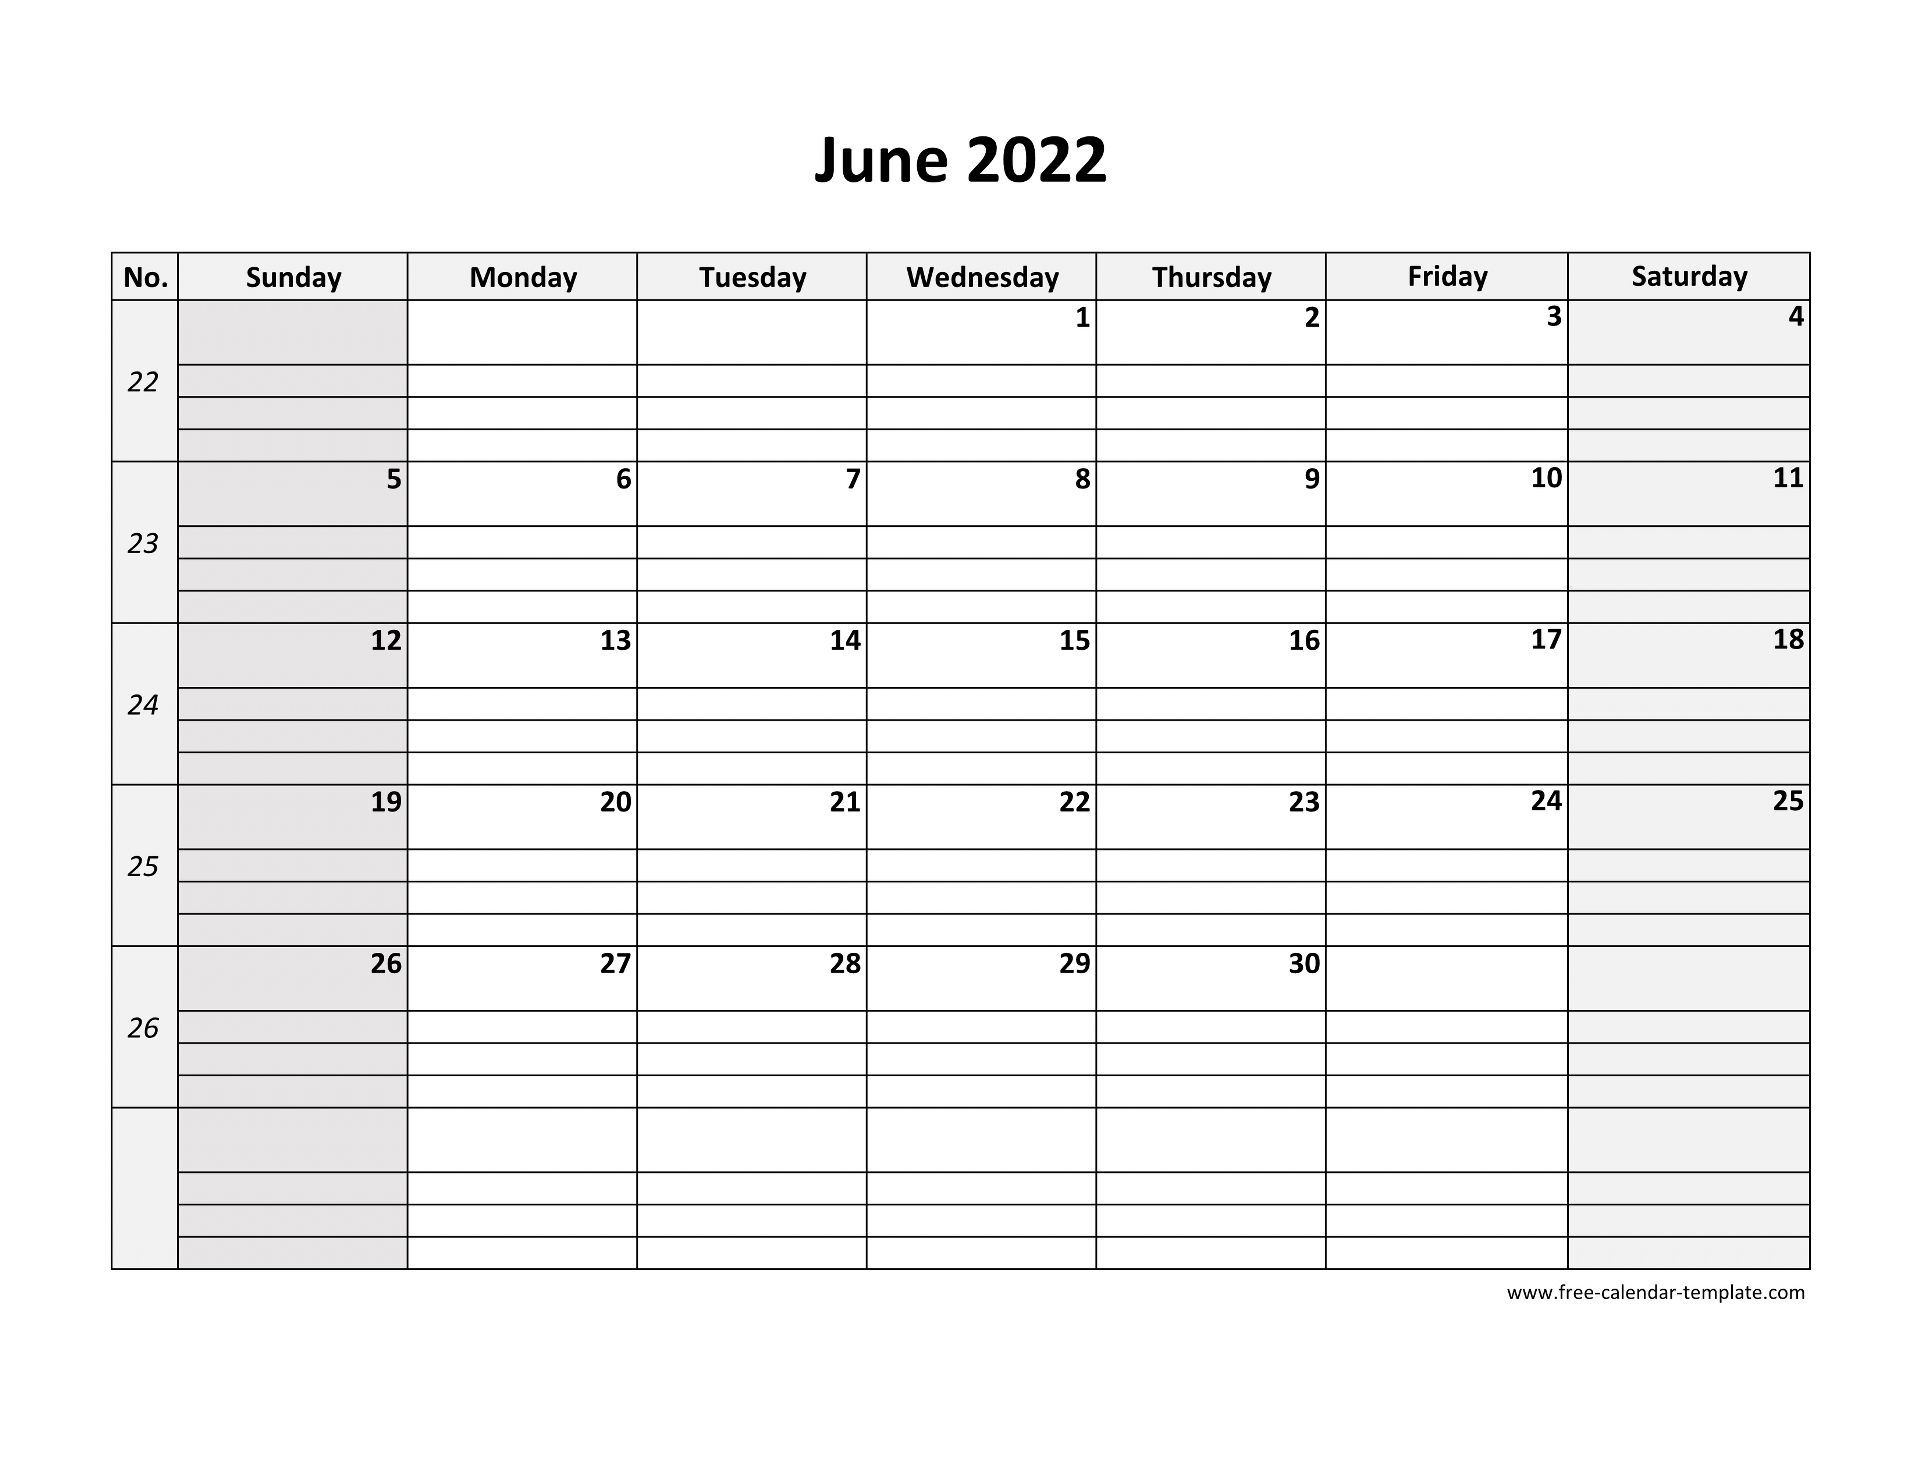 June 2022 Calendar Free Printable with grid lines designed (horizontal